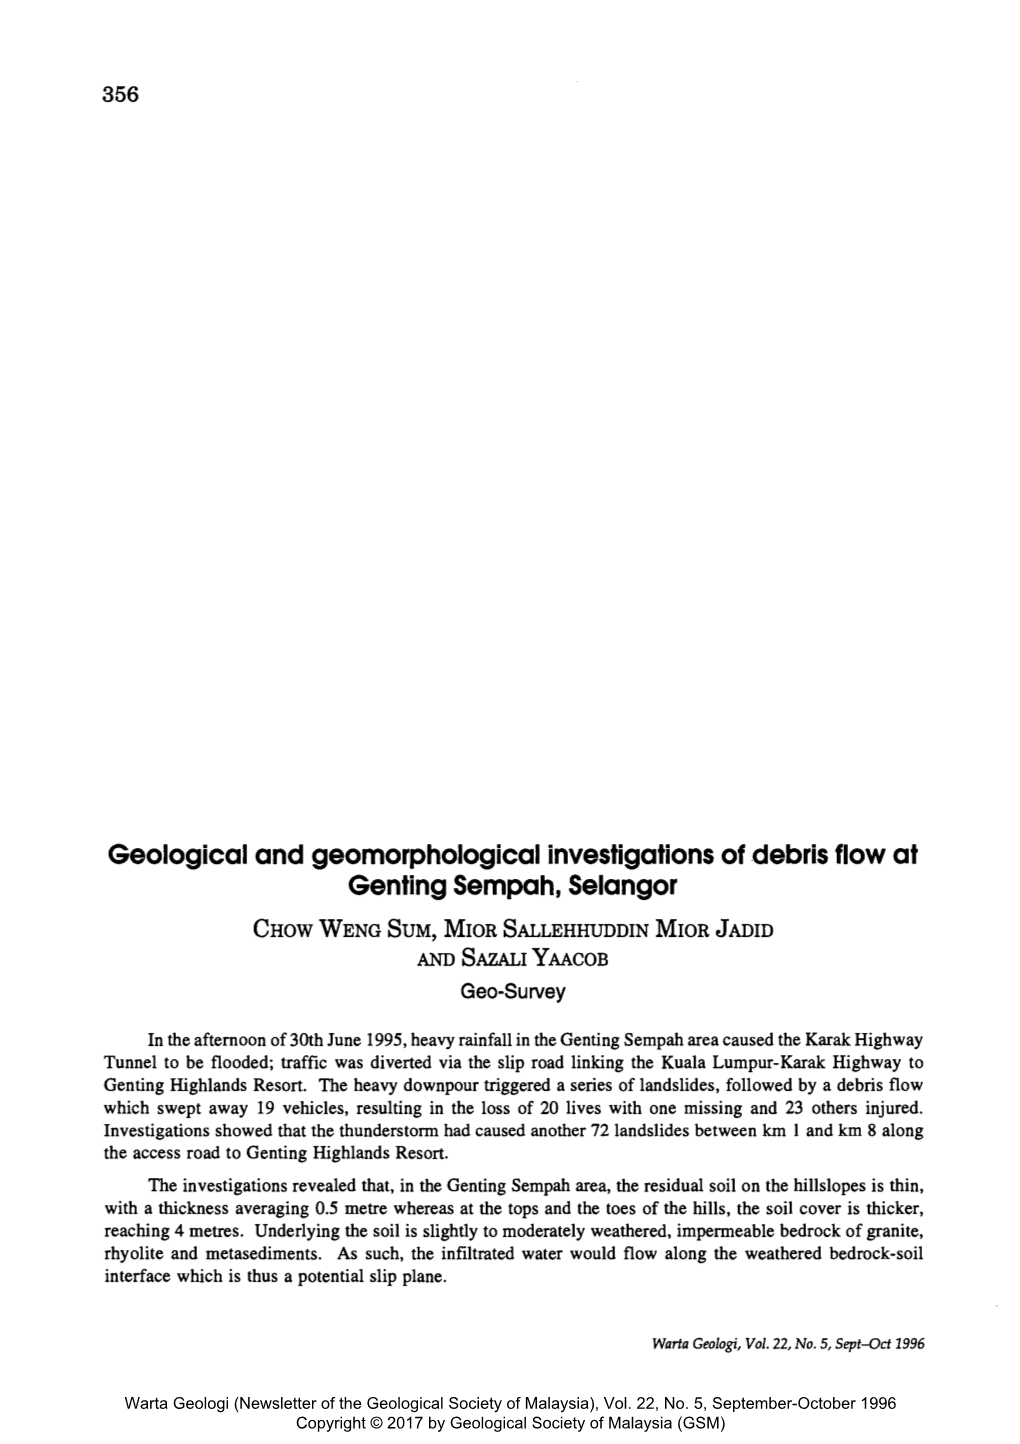 Geological and Geomorphological Investigations of Debris Flow at Genting Sempah, Selangor